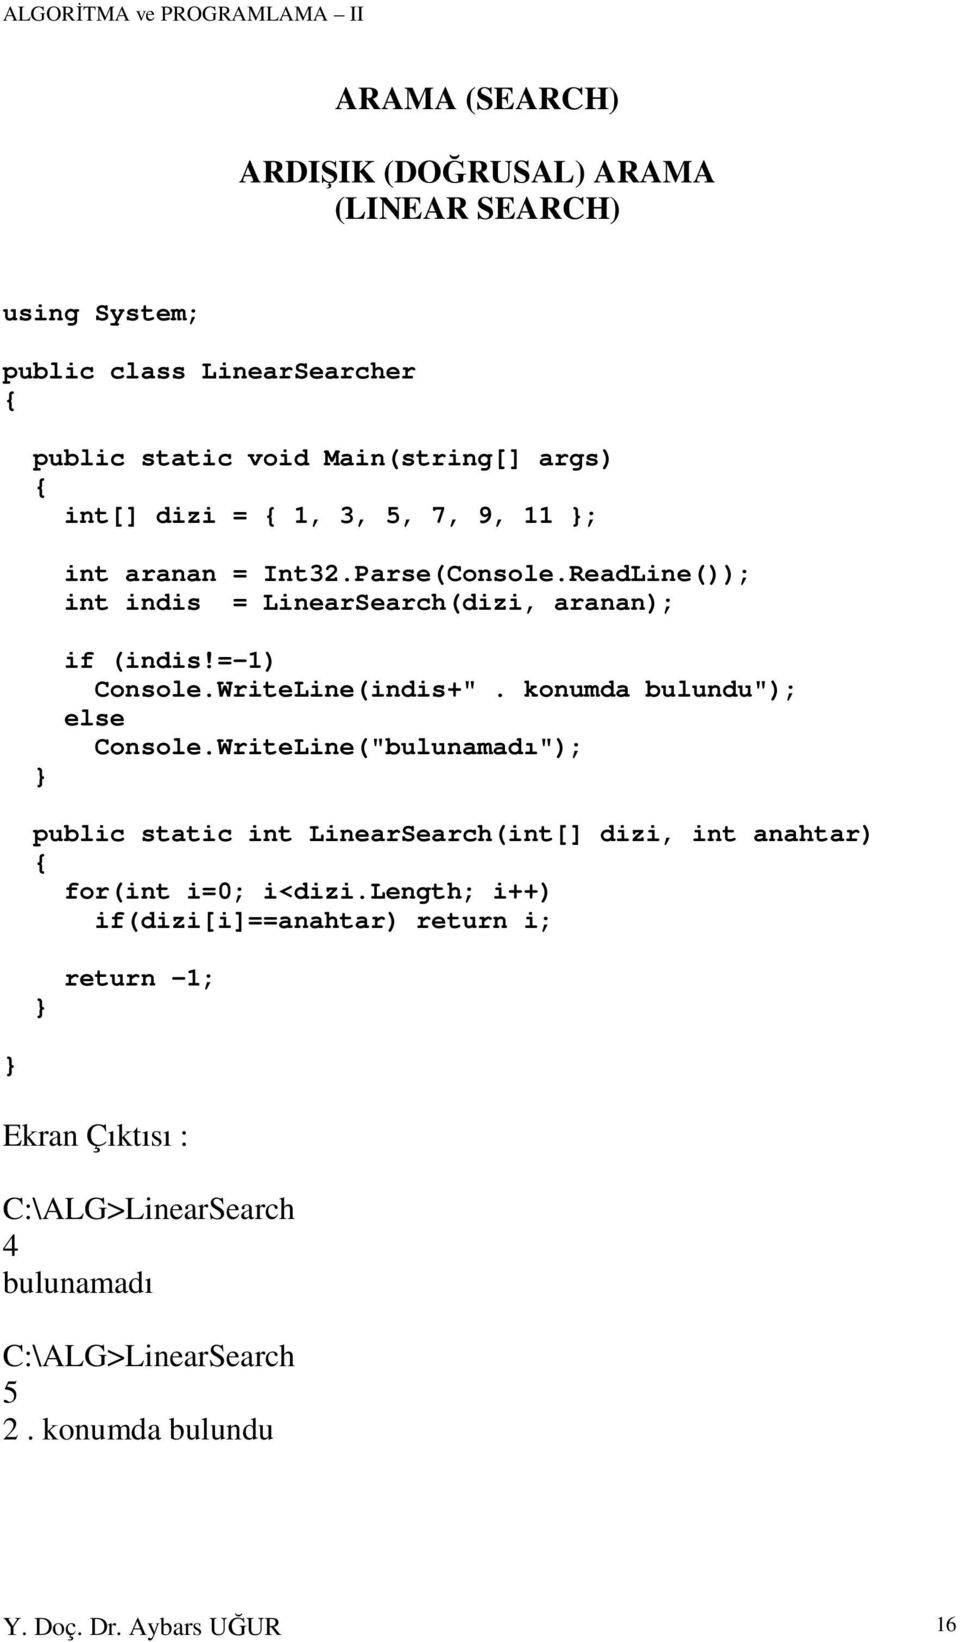 konumda bulundu"); else Console.WriteLine("bulunamadı"); public static int LinearSearch(int[] dizi, int anahtar) for(int i=0; i<dizi.